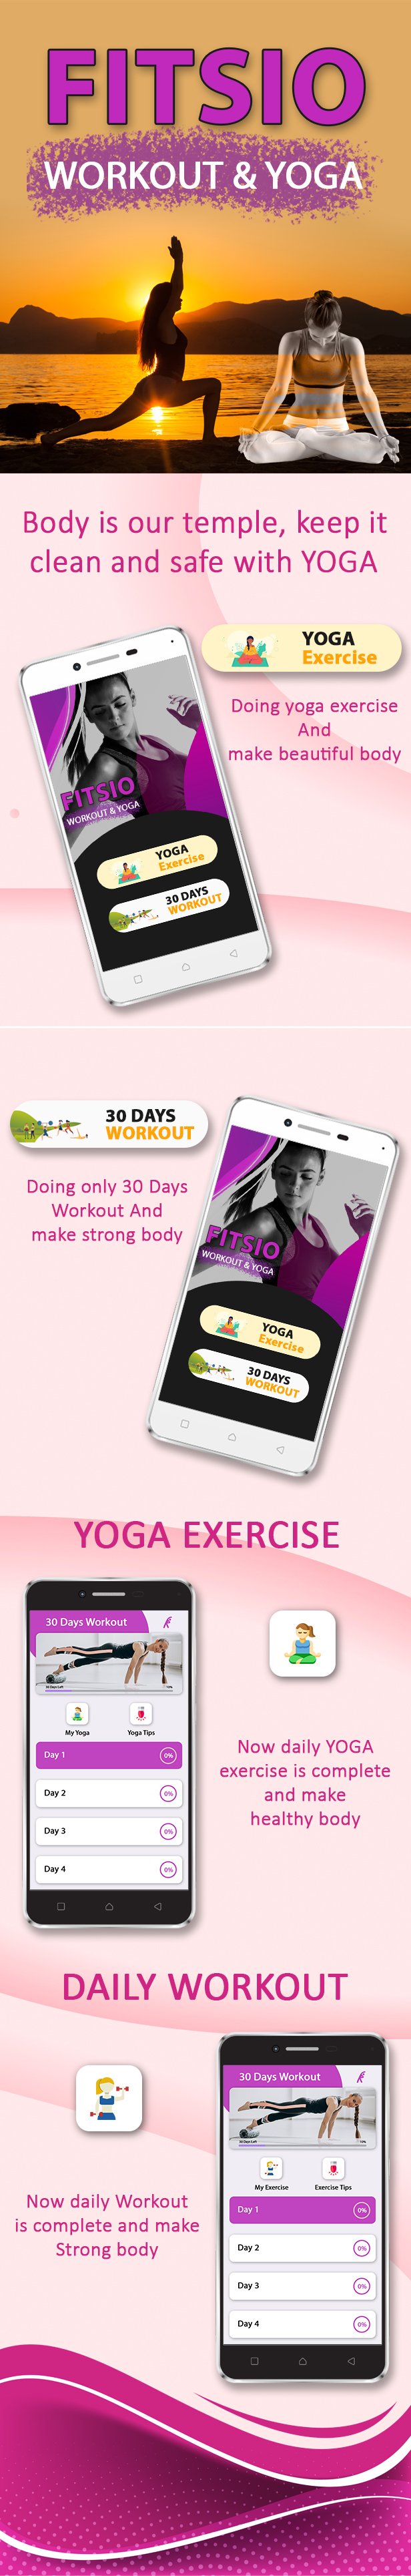 FITSIO : Workout & Yoga Fitness app - 1